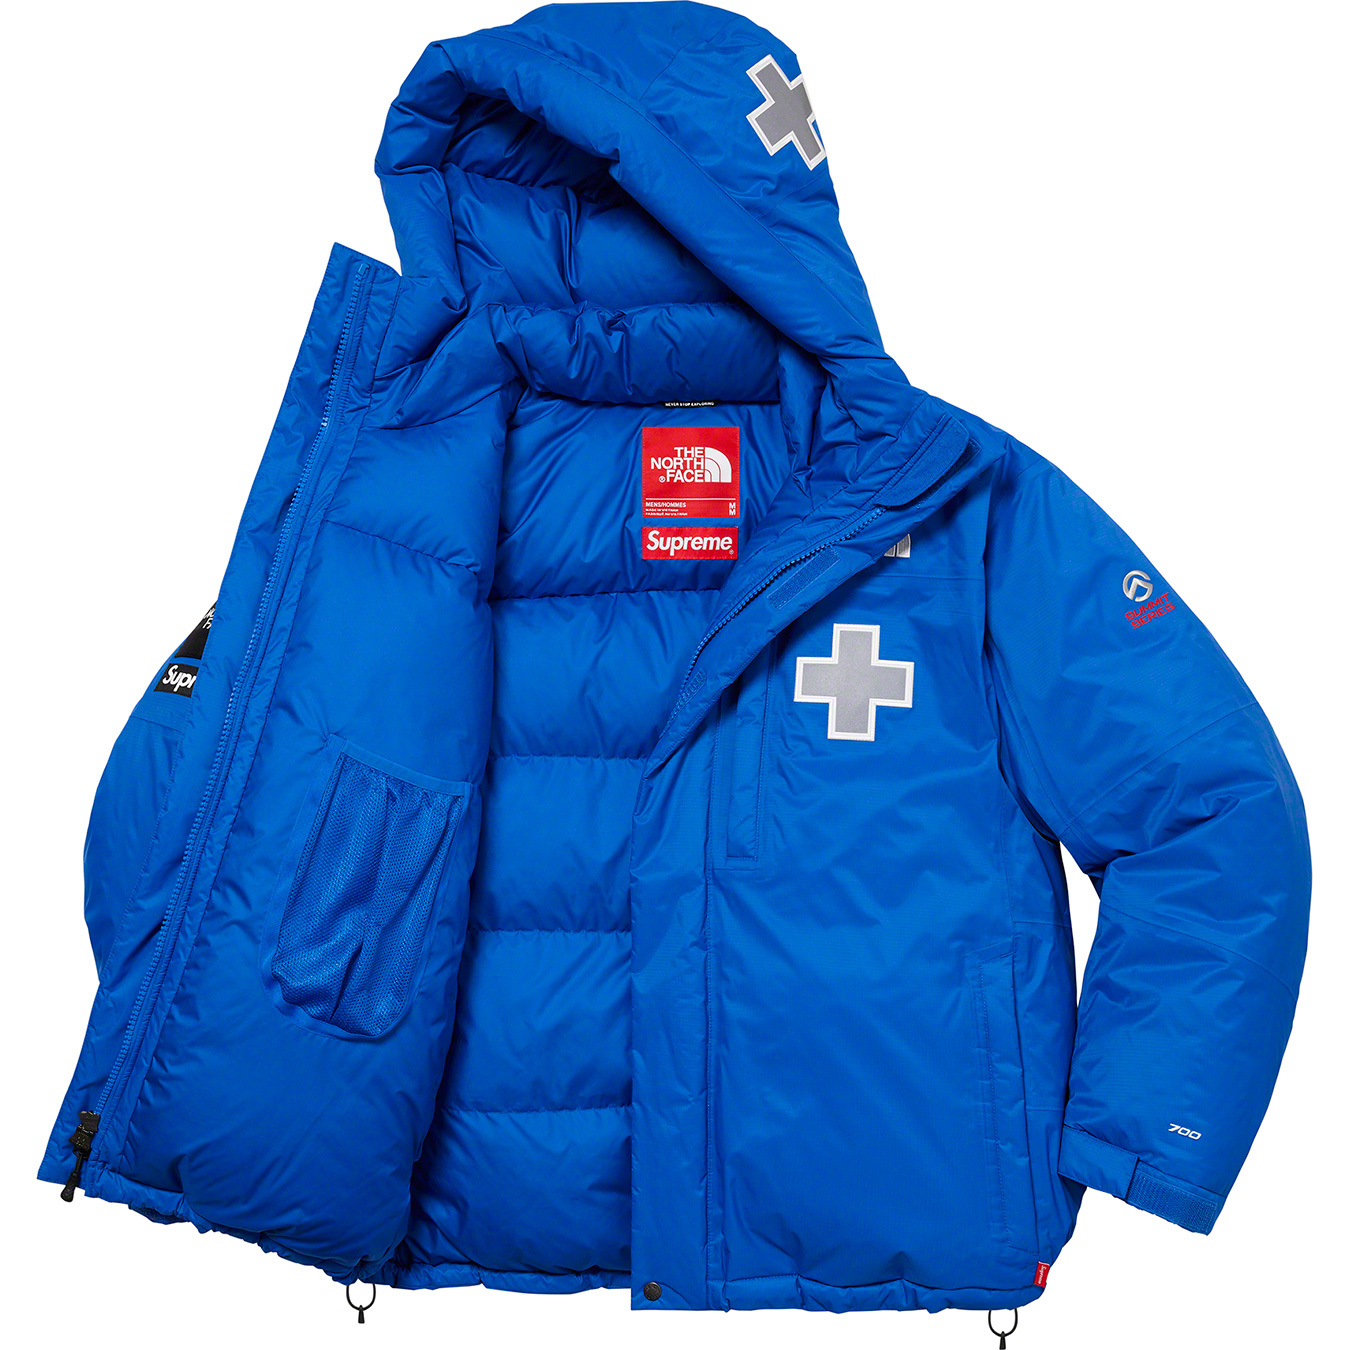 Supreme®/The North Face® Summit Series Rescue Baltoro Jacket